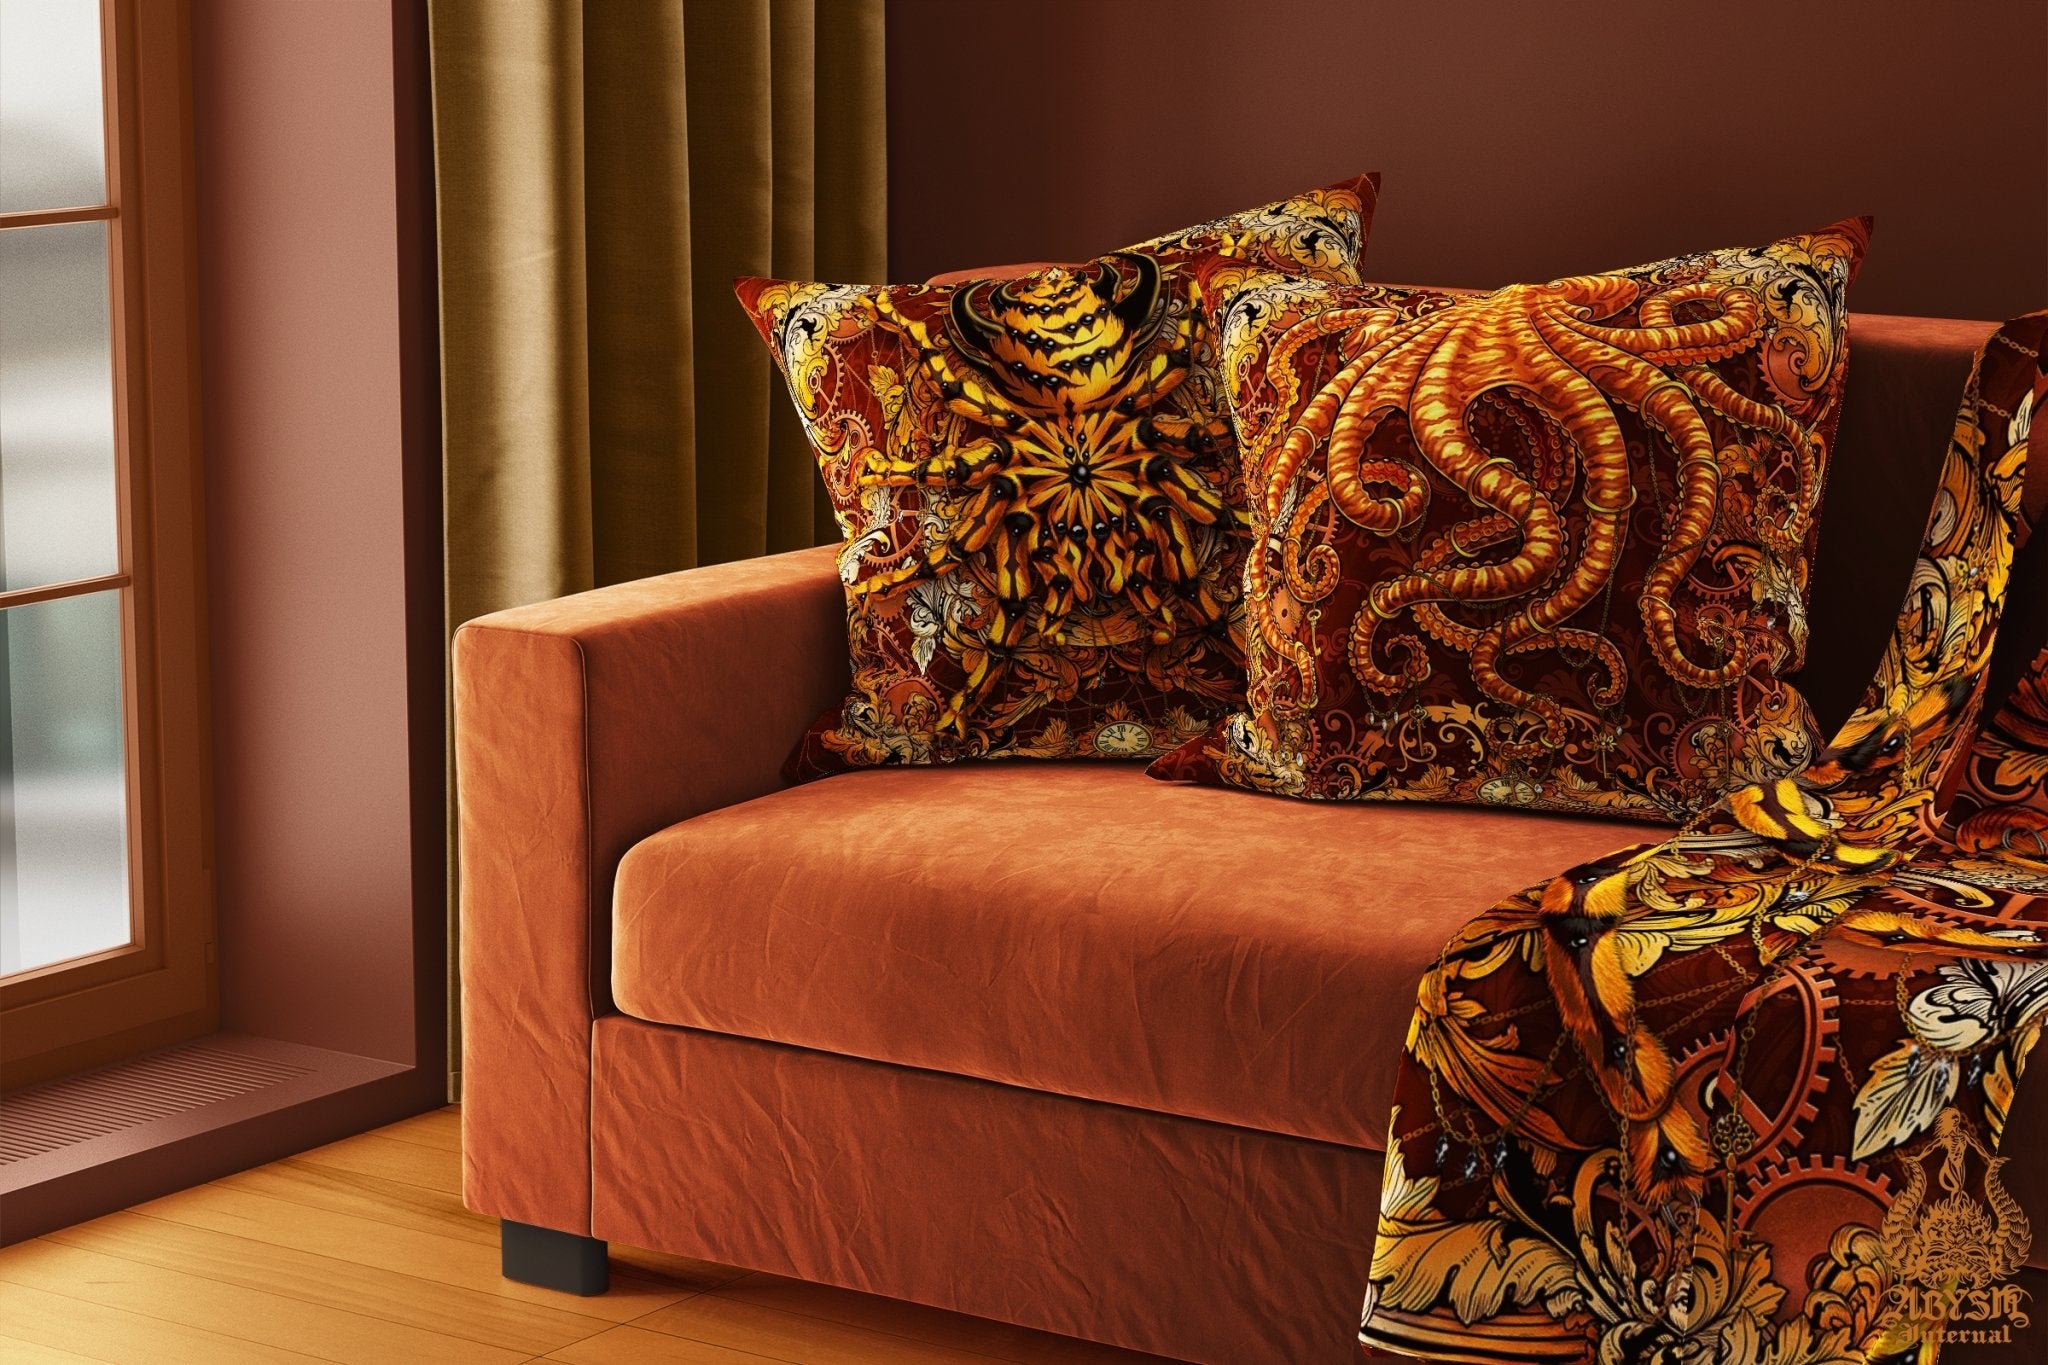 Steampunk Throw Pillow, Decorative Accent Cushion, Baroque Room Decor - Tarantula Spider - Abysm Internal